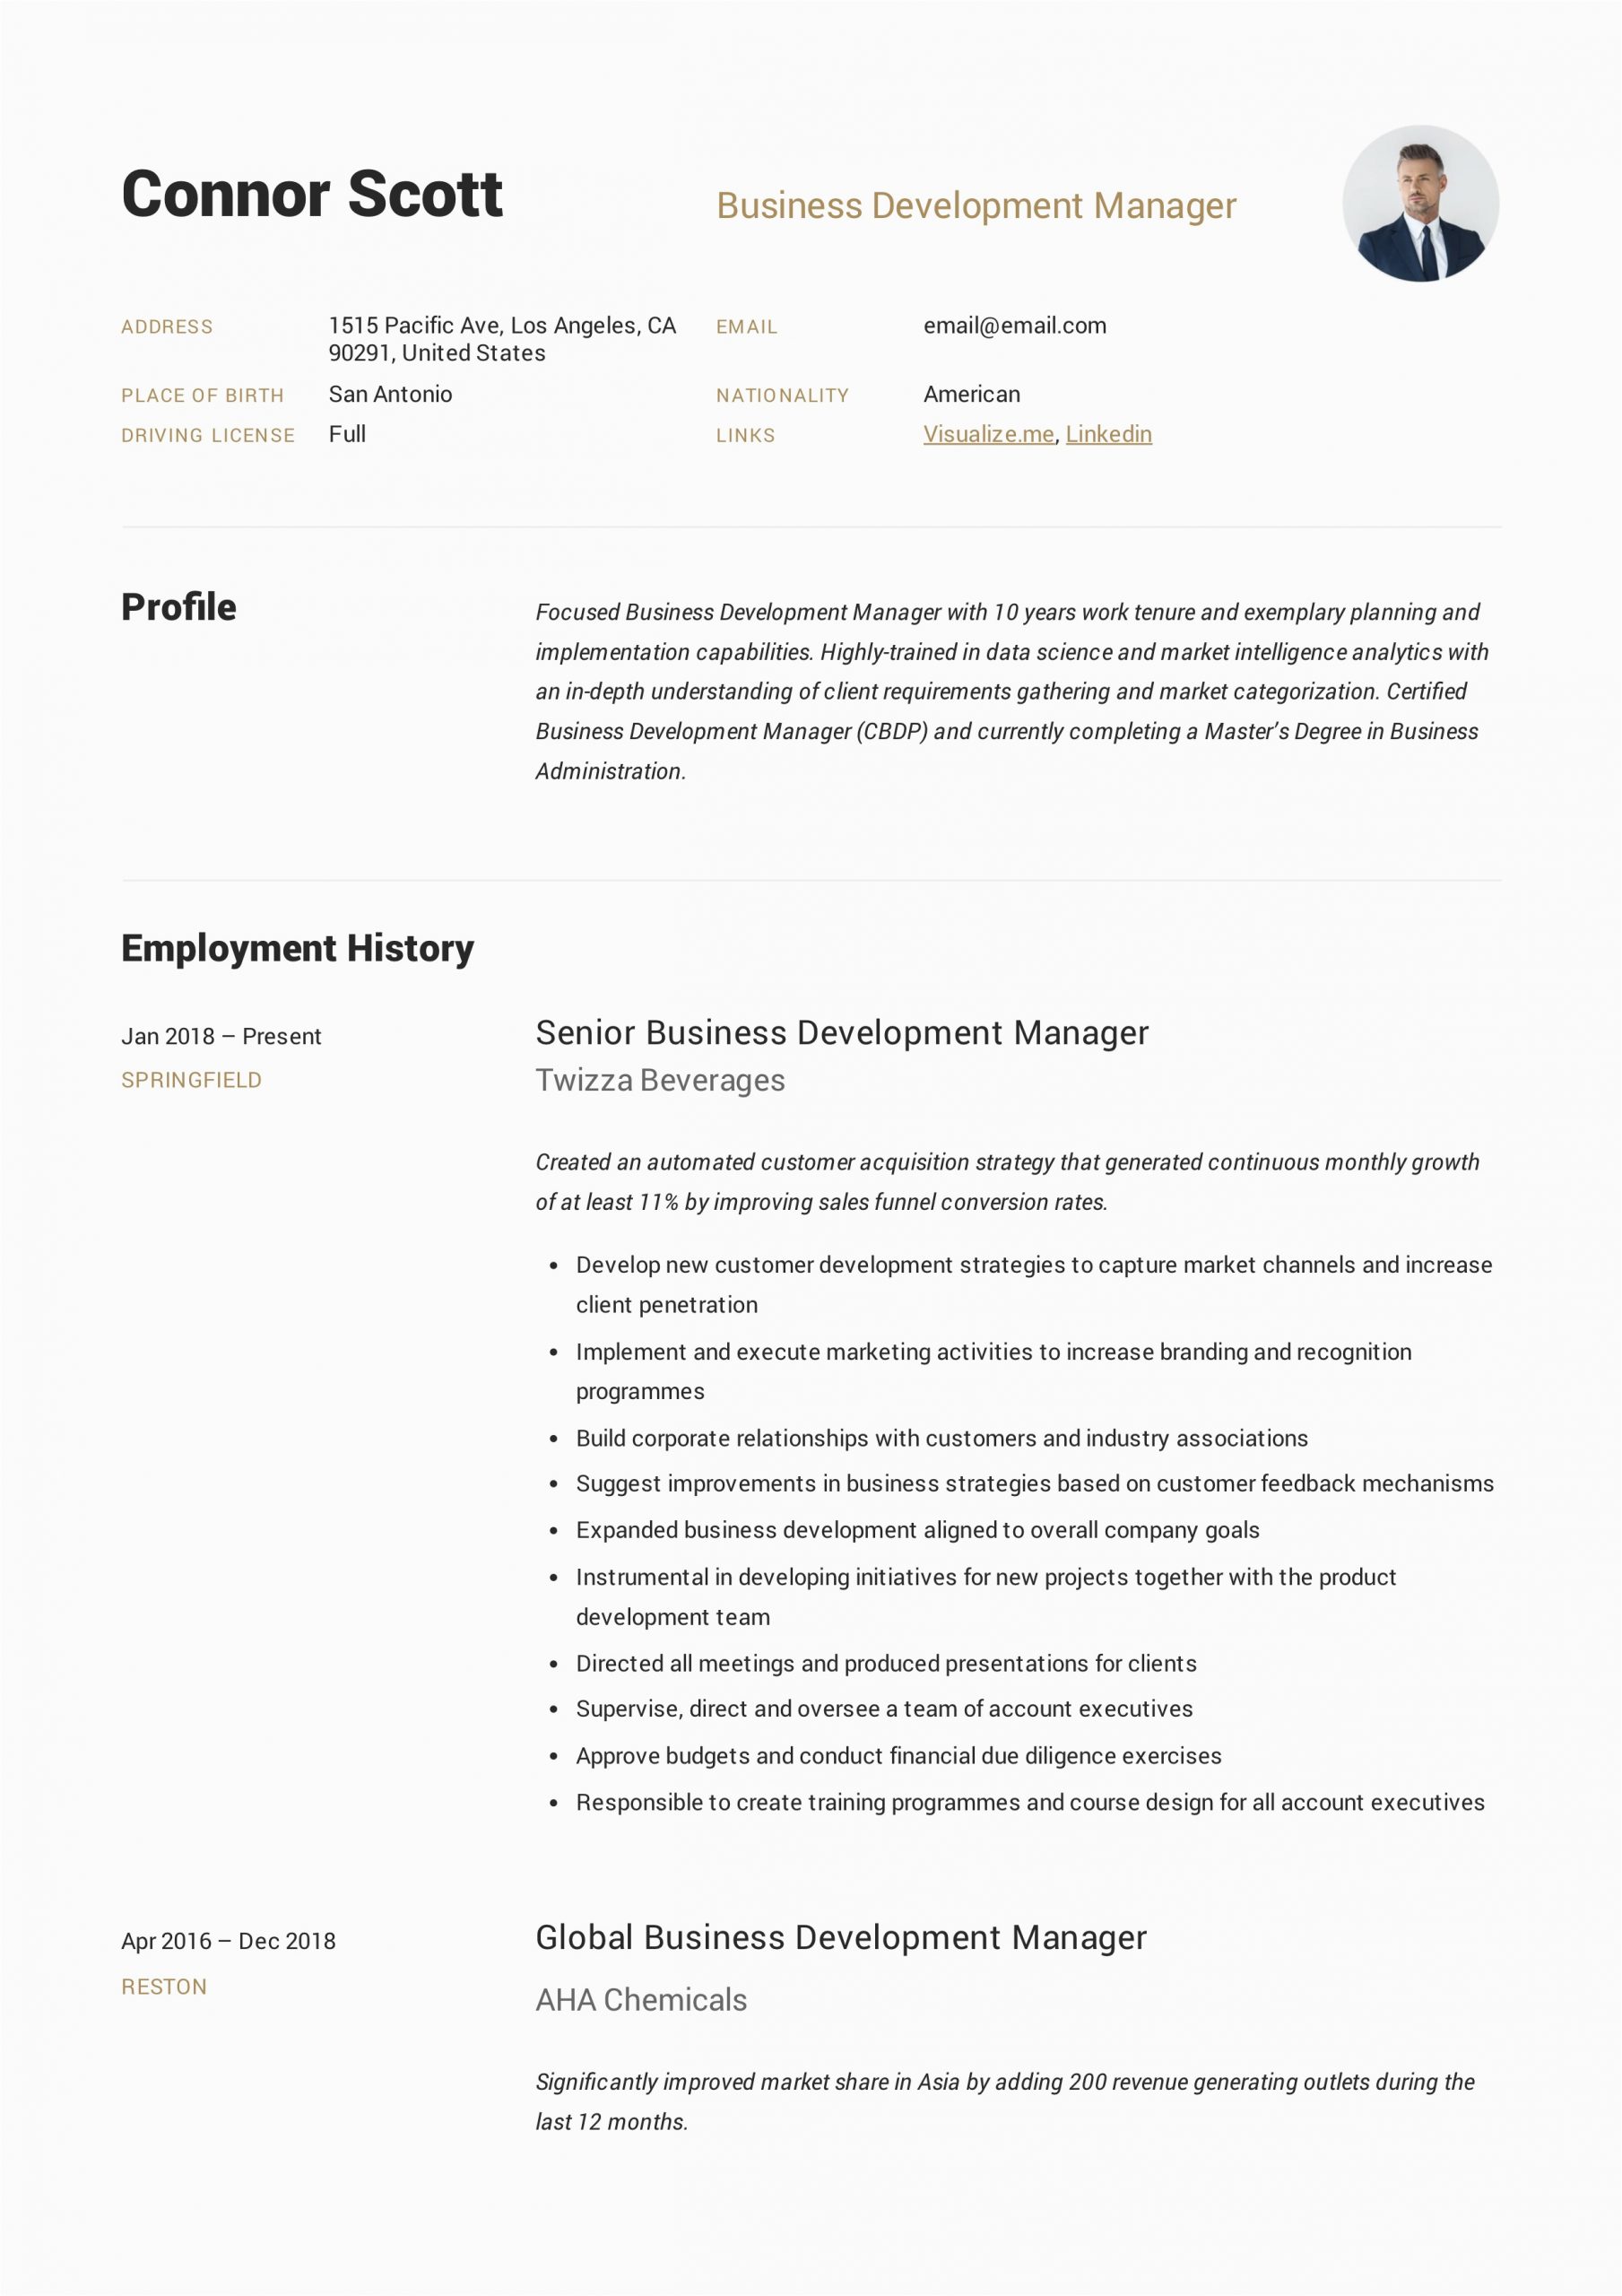 Resume Template for Business Development Manager Business Development Manager Resume & Guide